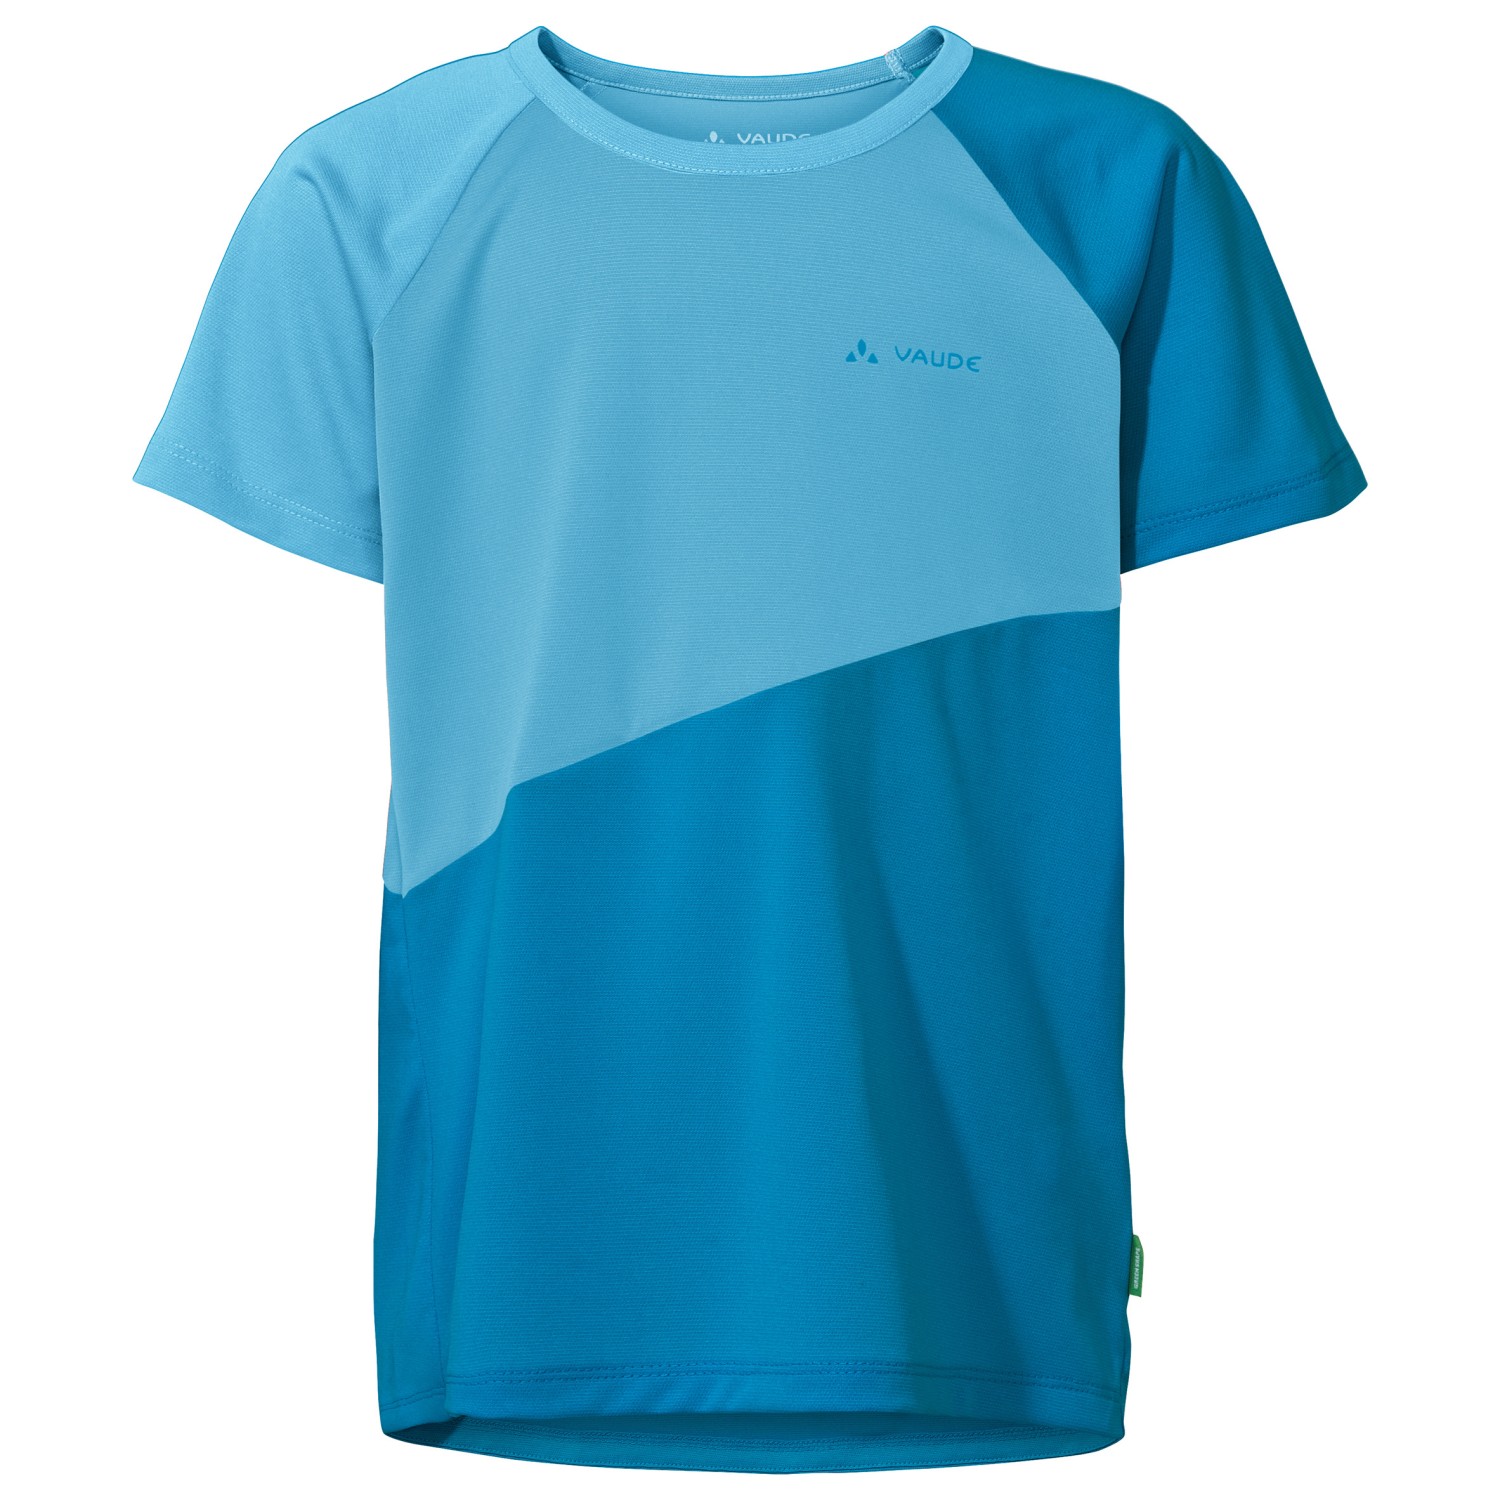 Функциональная рубашка Vaude Kid's Moab T Shirt II, цвет Icicle функциональная рубашка vaude tekoa t shirt iii цвет nordic blue